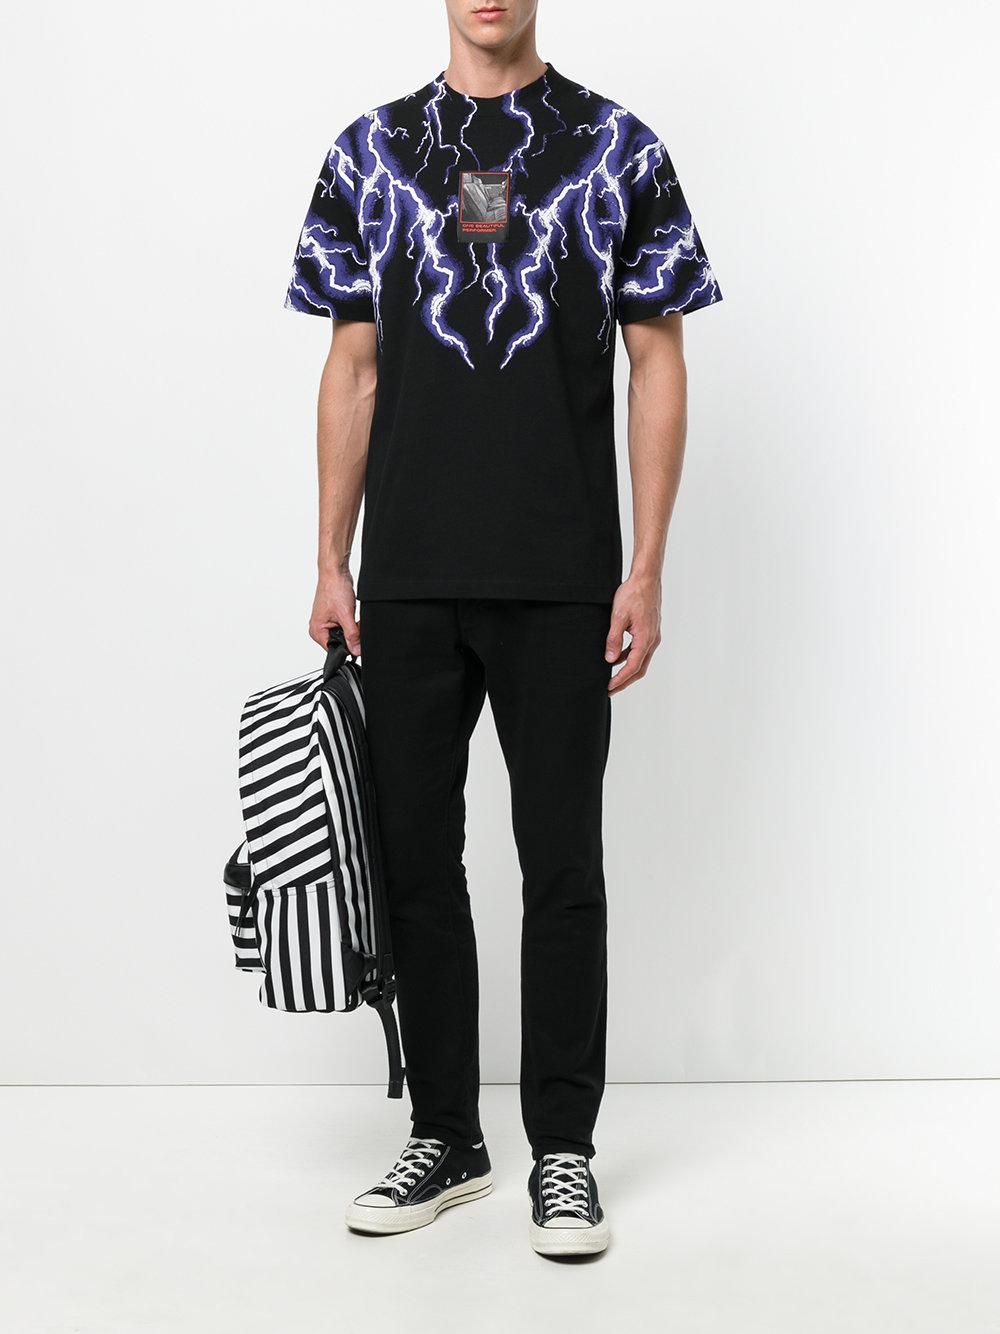 Alexander Wang Lightning Collage T-shirt in Black for Men | Lyst